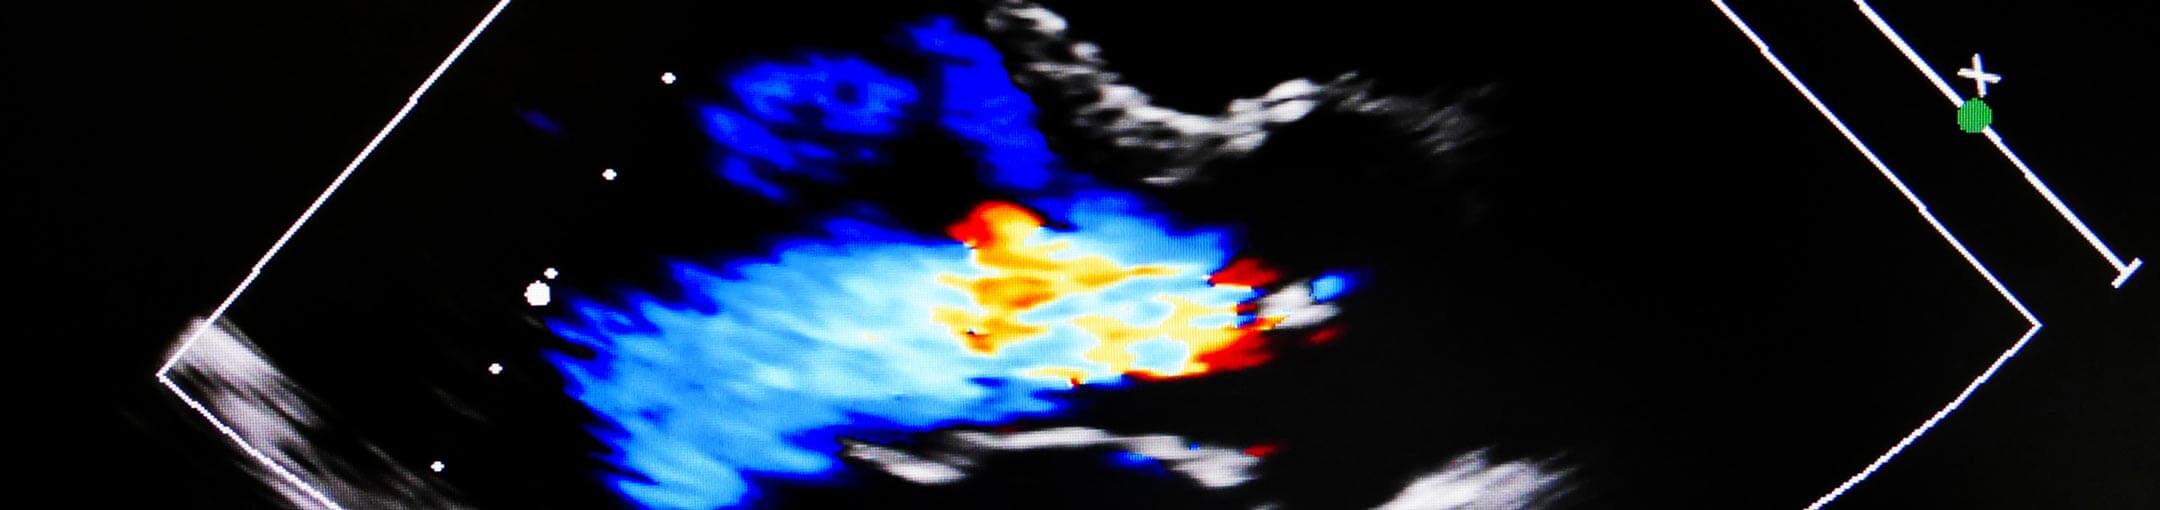 Colorful echocardiogram screen.